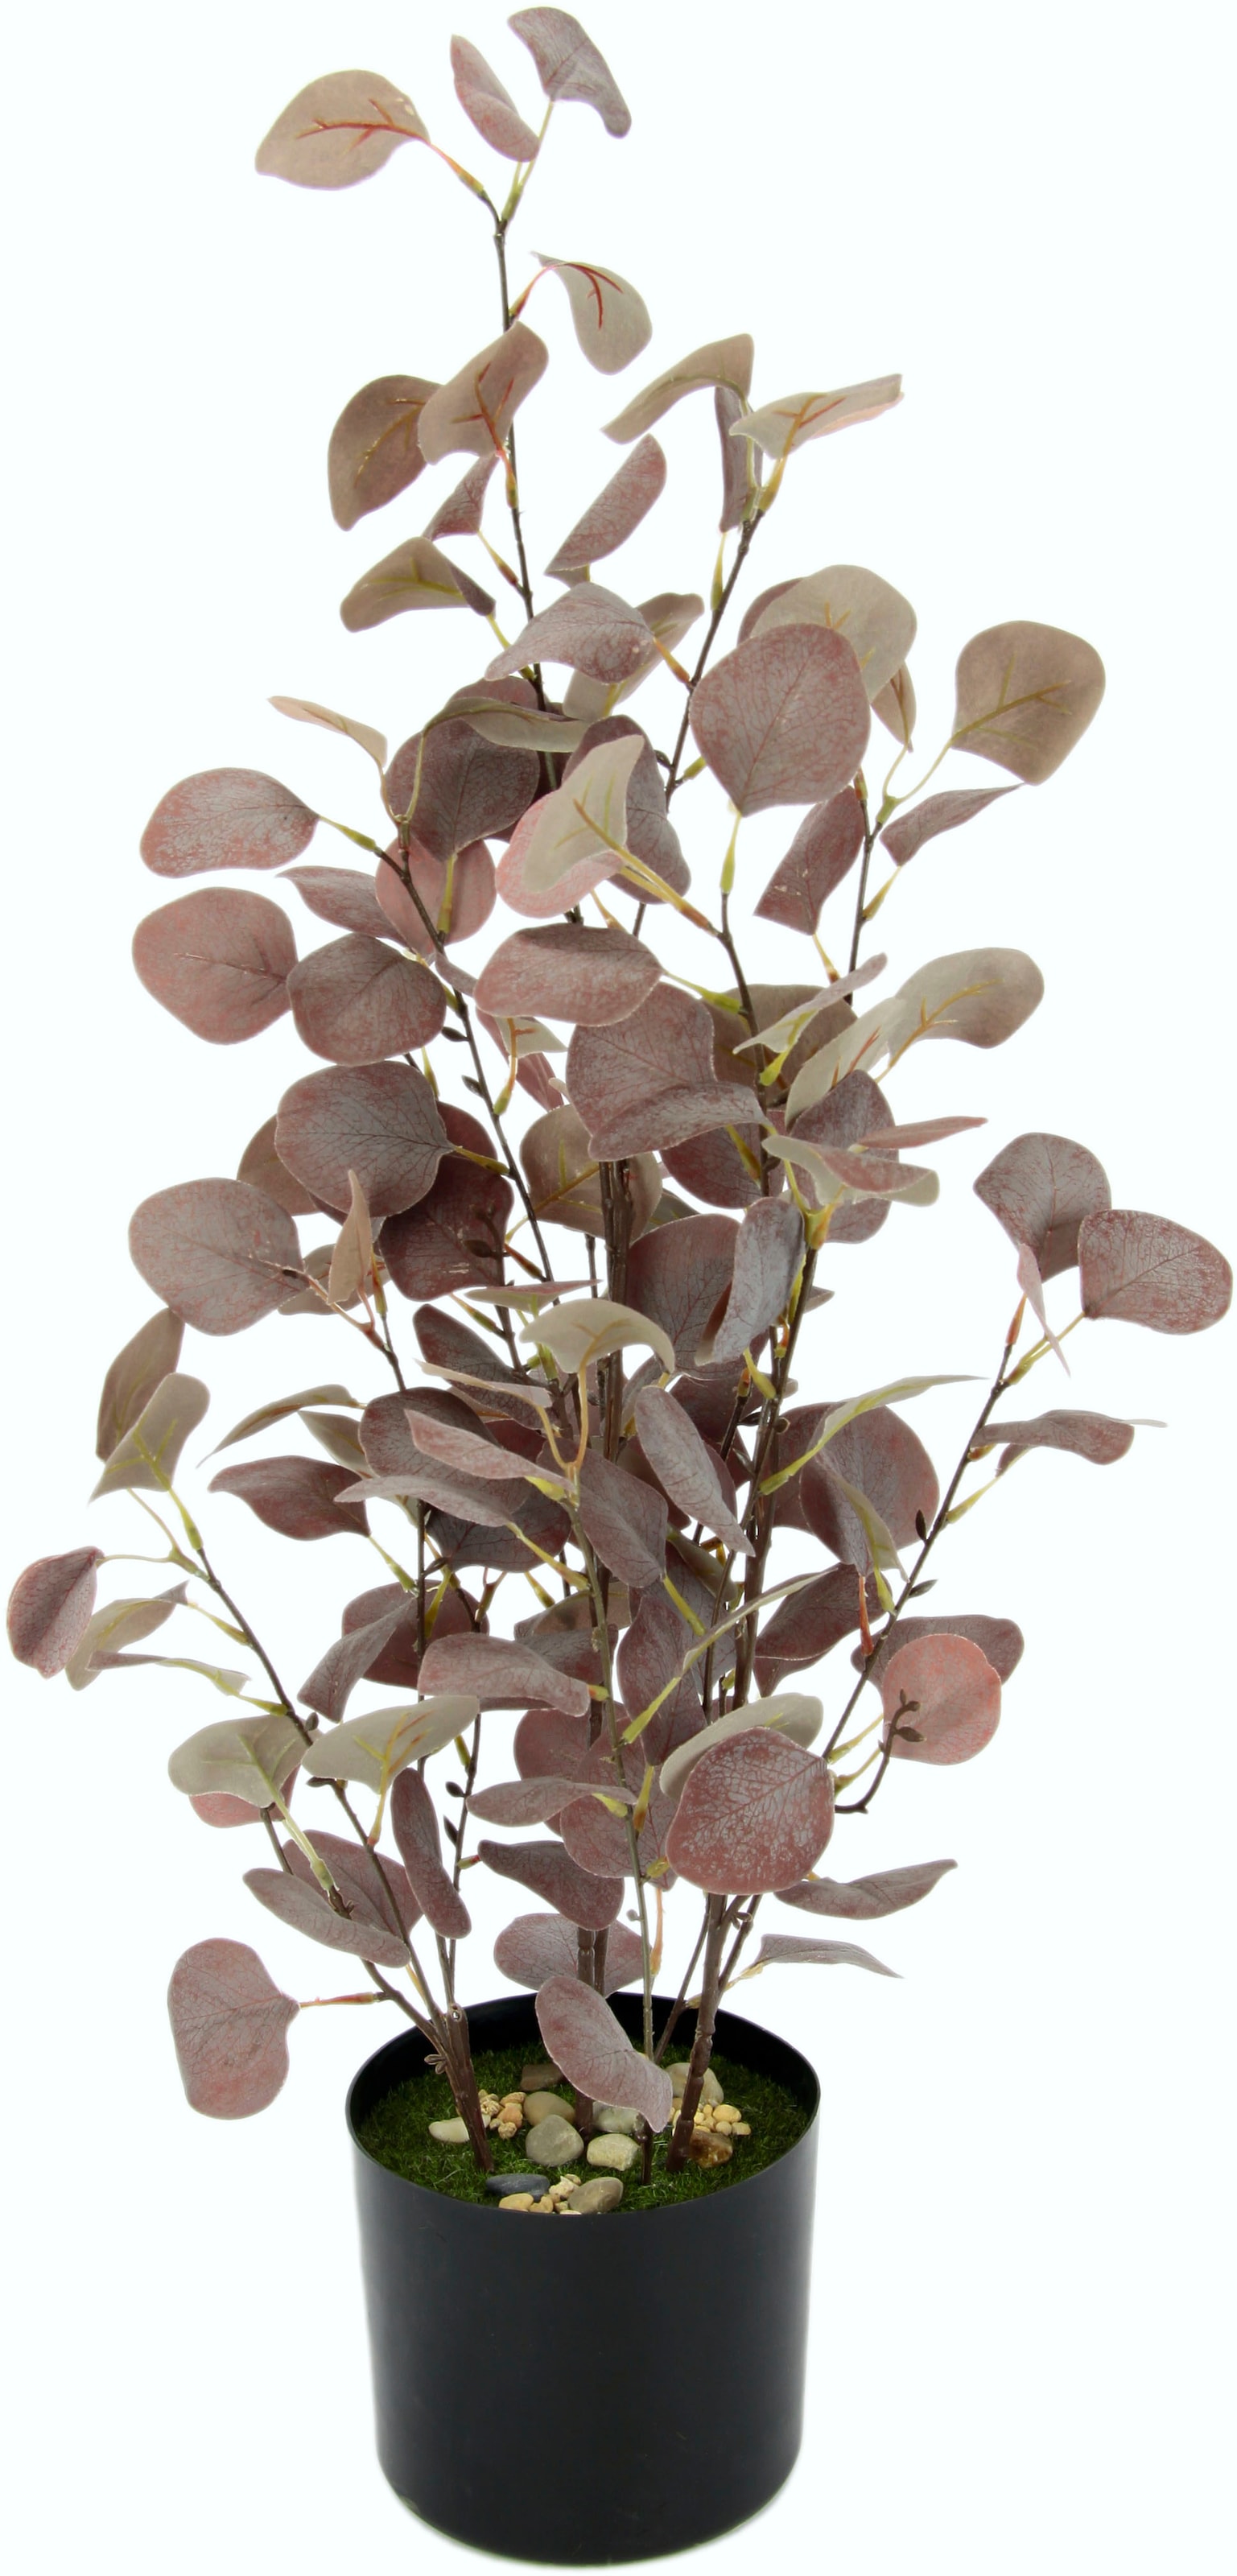 I.GE.A. Kunstpflanze kaufen bequem »Eukalyptuspflanze«, Kunststofftopf im